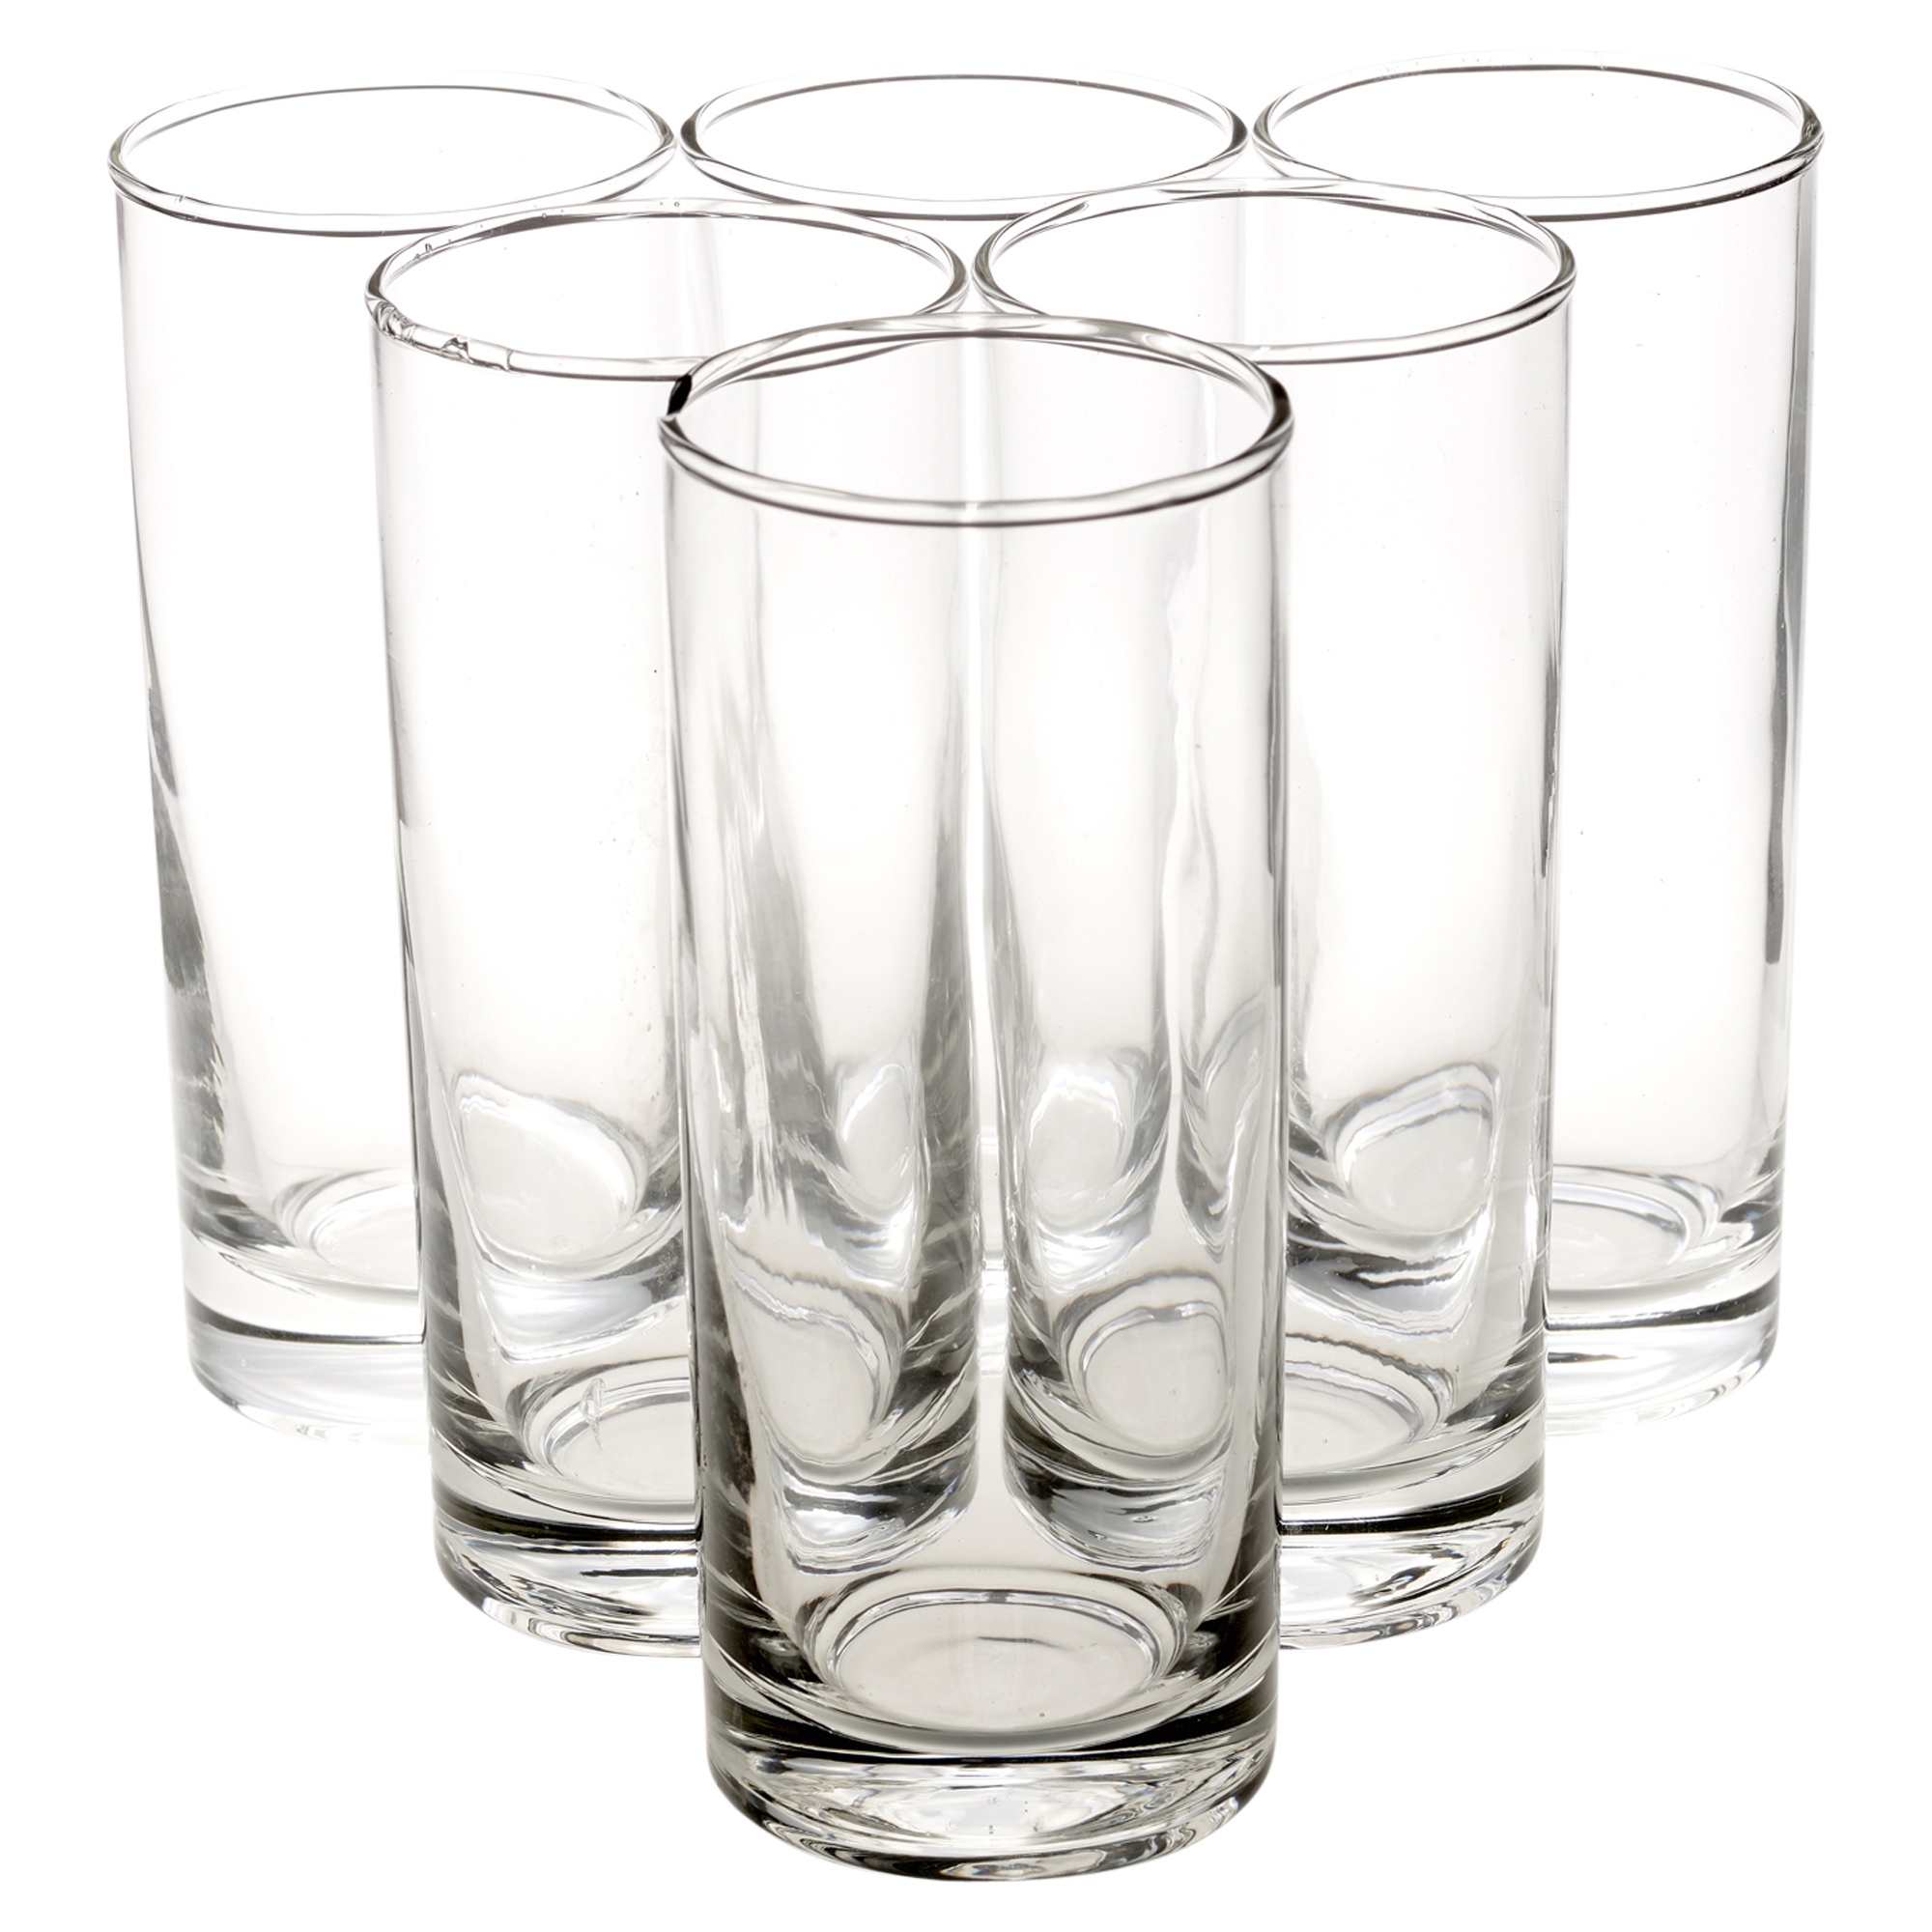 6 x 35cl Tall Classic Hi Ball Drinking Water Glasses Gift Box Set